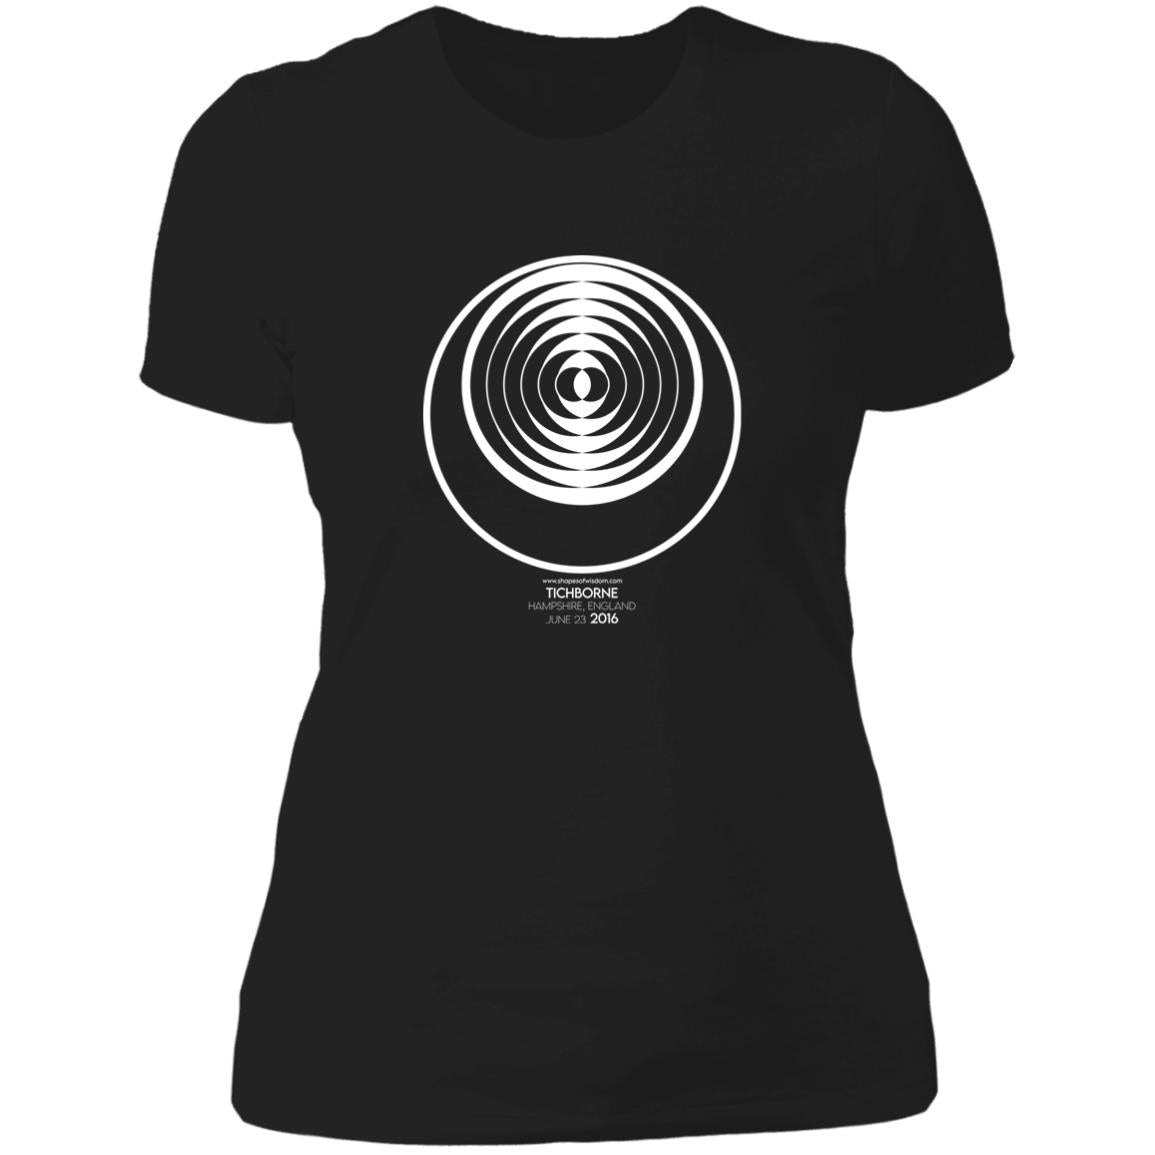 Crop Circle Basic T-Shirt - Tichborne 2